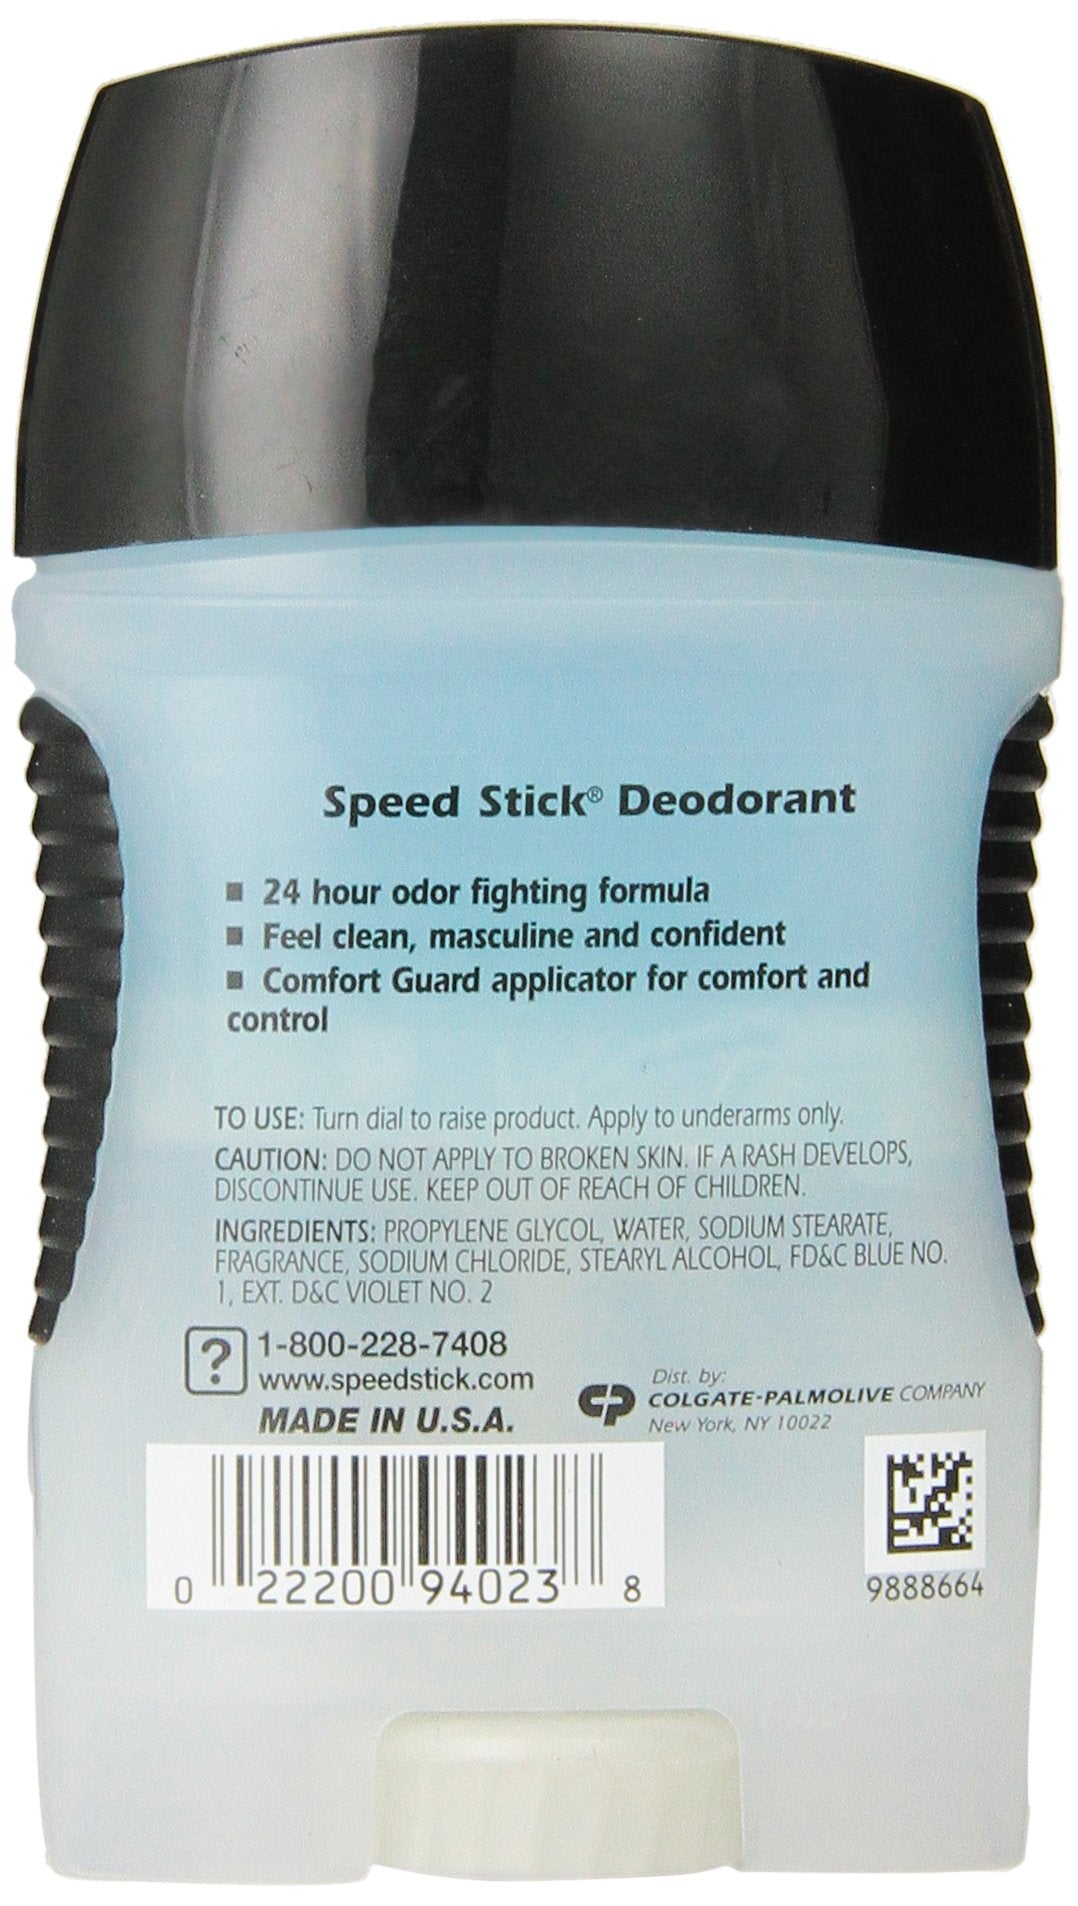 Speed Stick Deodorant for Men, Ocean Surf - 1.8 Ounce